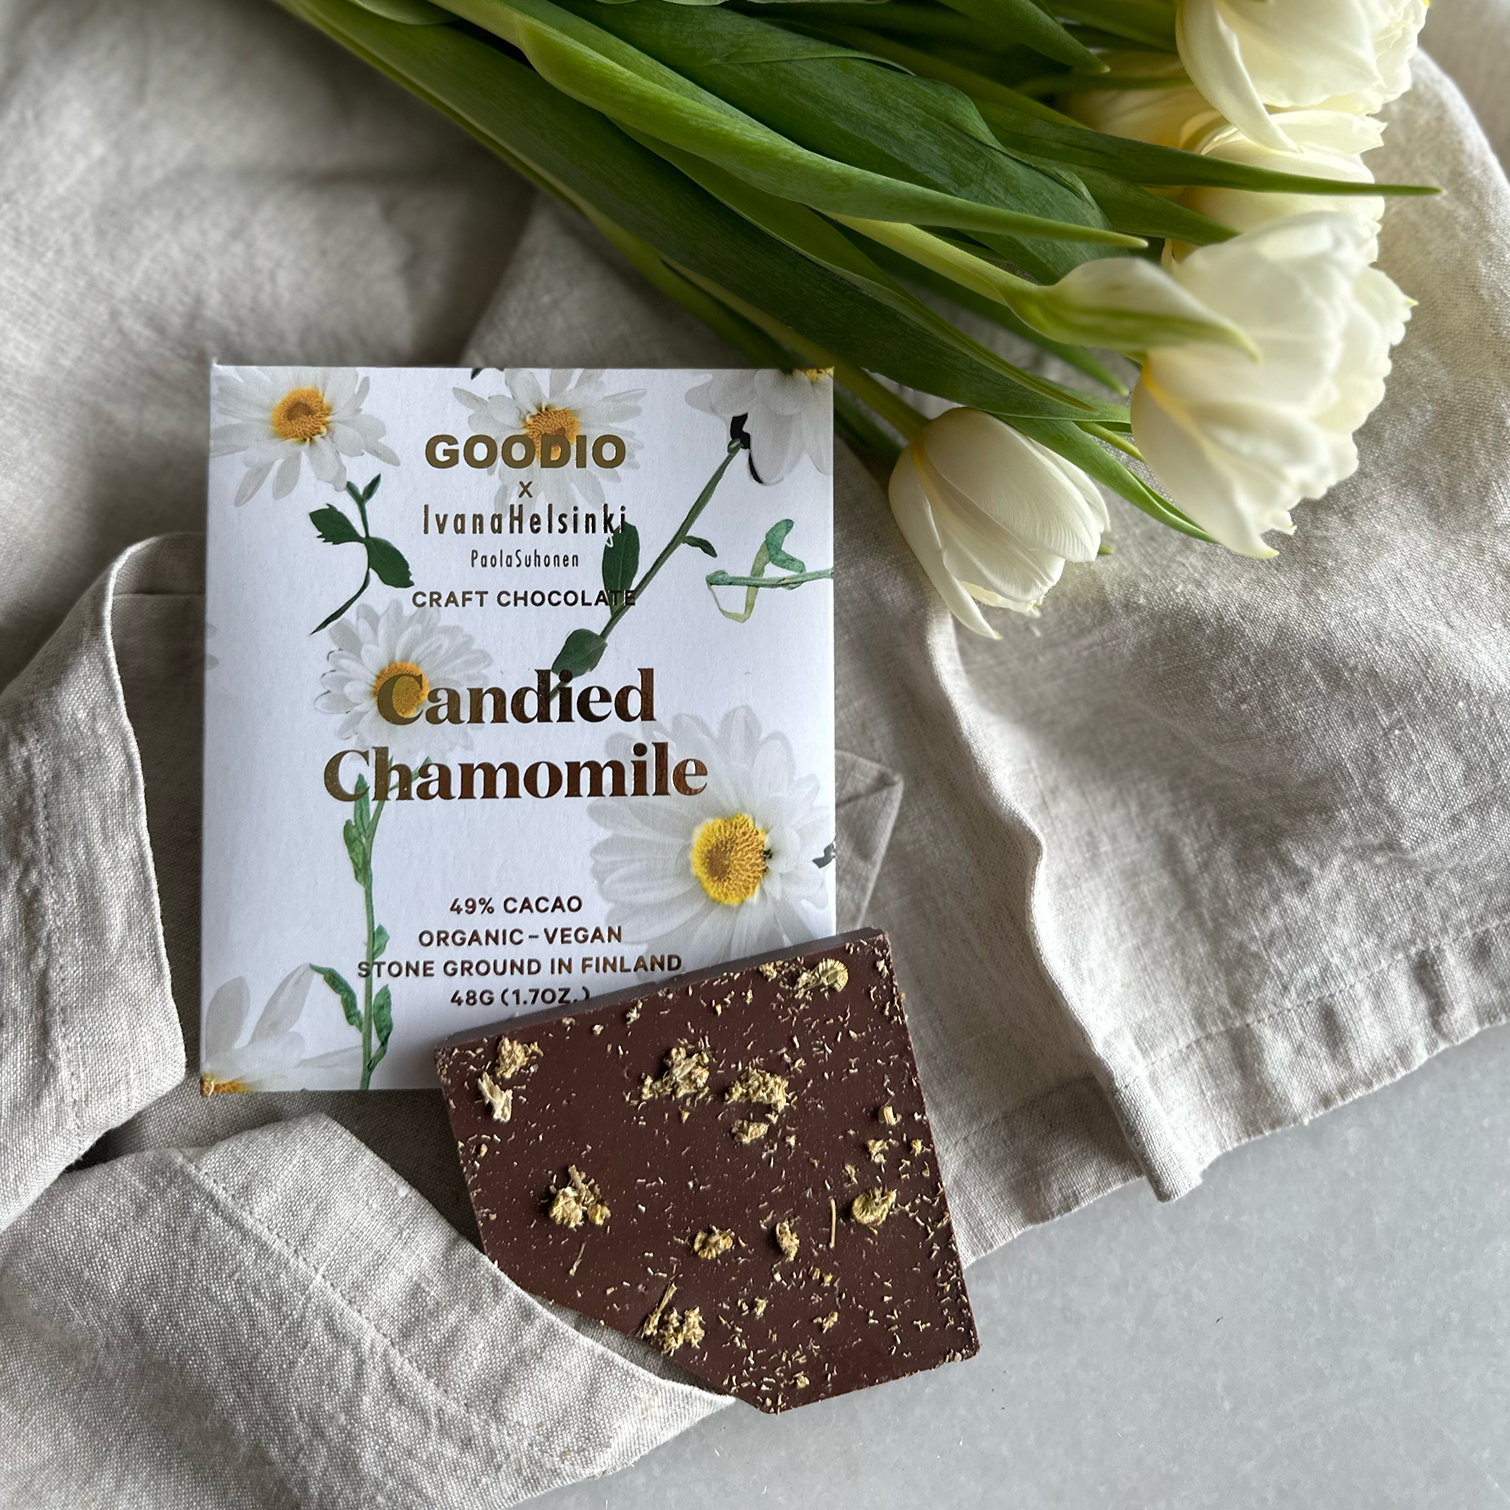 Goodio vegan design gift chocolate Candied Chamomile